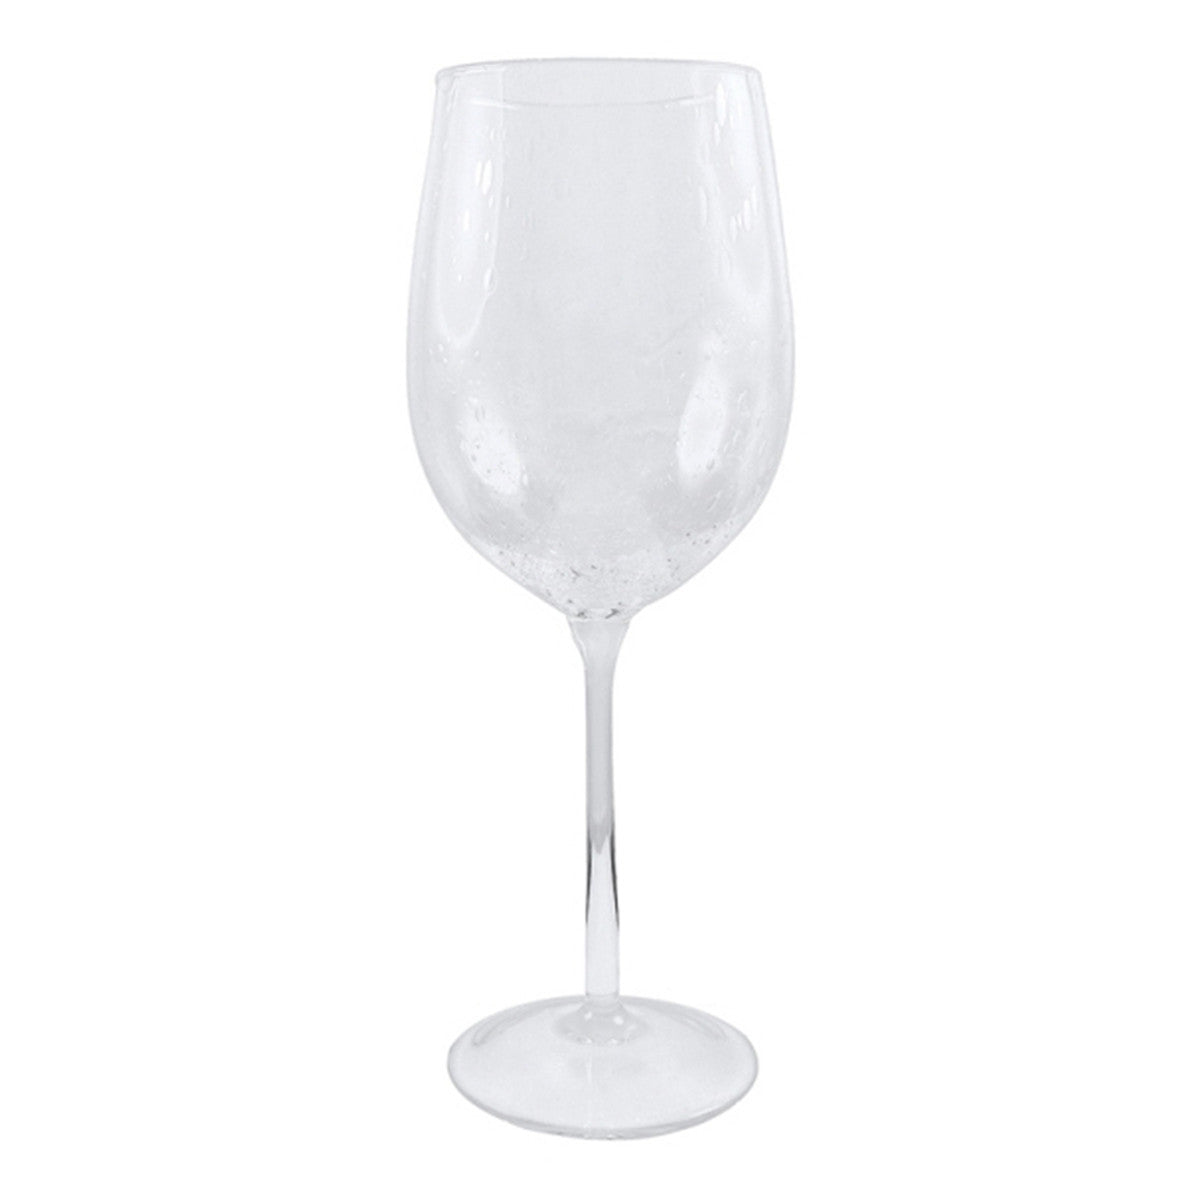 Mariposa Bellini White Wine Glass